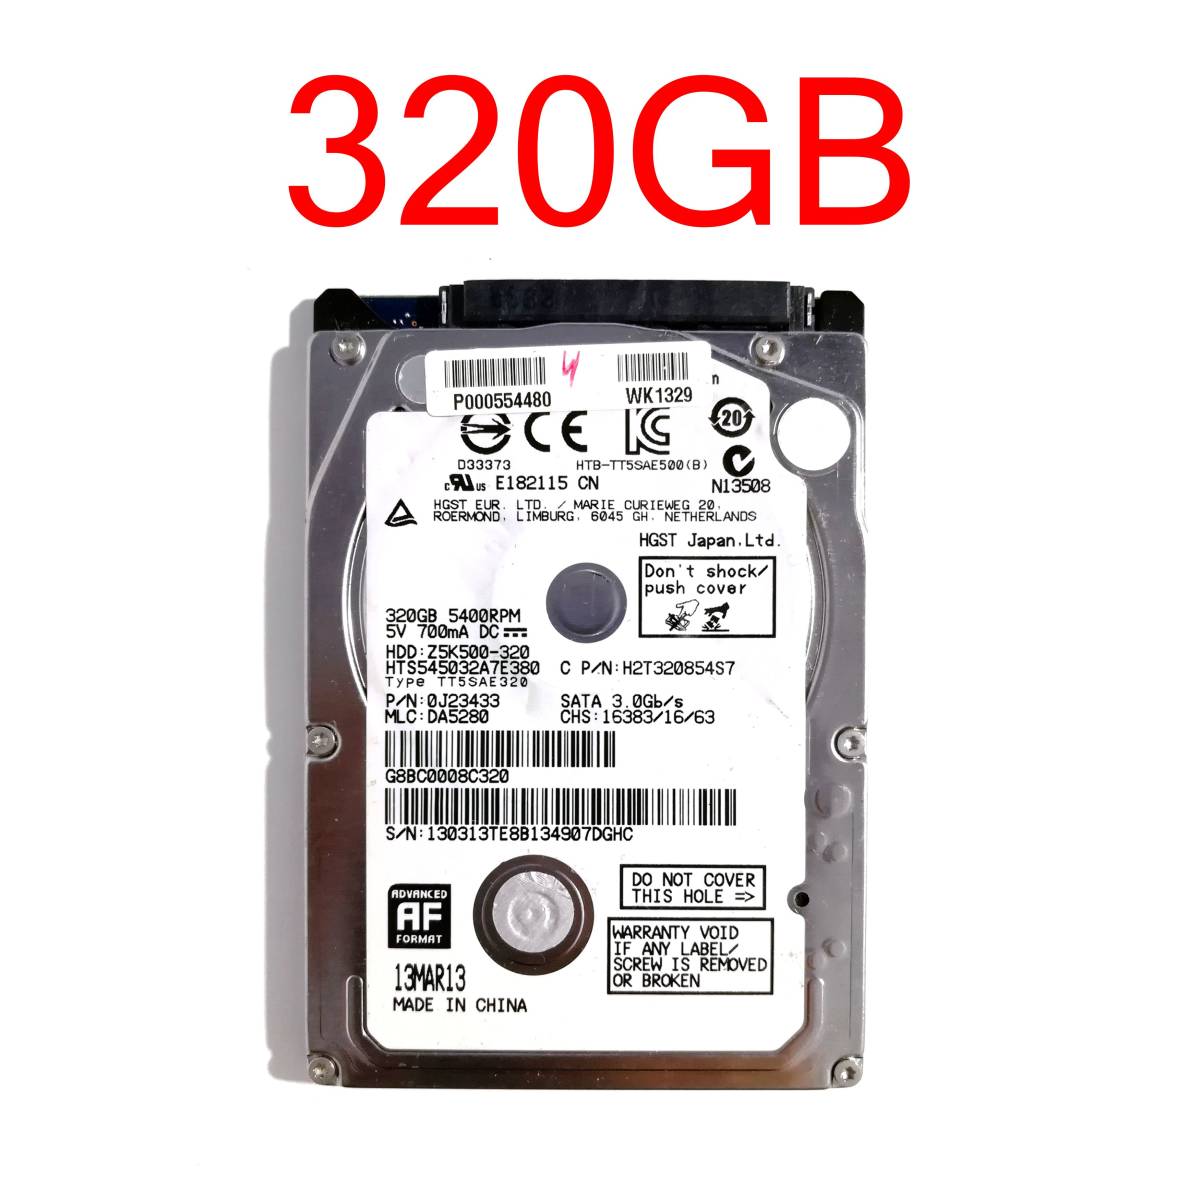 HDD 320GB 2.5インチ 7mm SATA 3Gbps 正常 HGST Travelstar Z5K500-320 HTS545032A7E380 0J23433 ハードディスクドライブ [HDD2S#17]